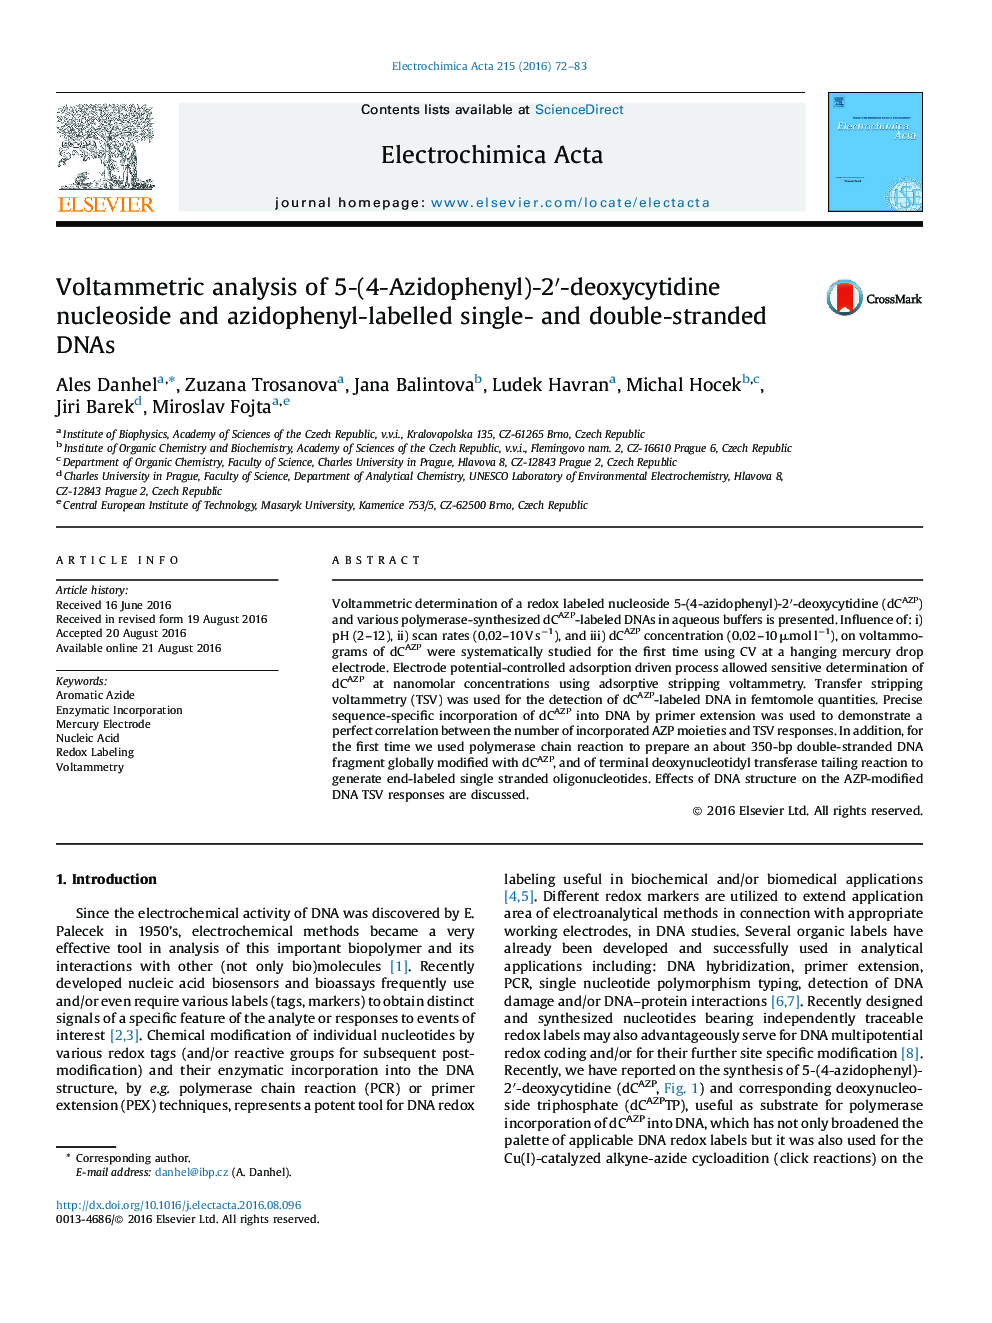 Voltammetric analysis of 5-(4-Azidophenyl)-2â²-deoxycytidine nucleoside and azidophenyl-labelled single- and double-stranded DNAs